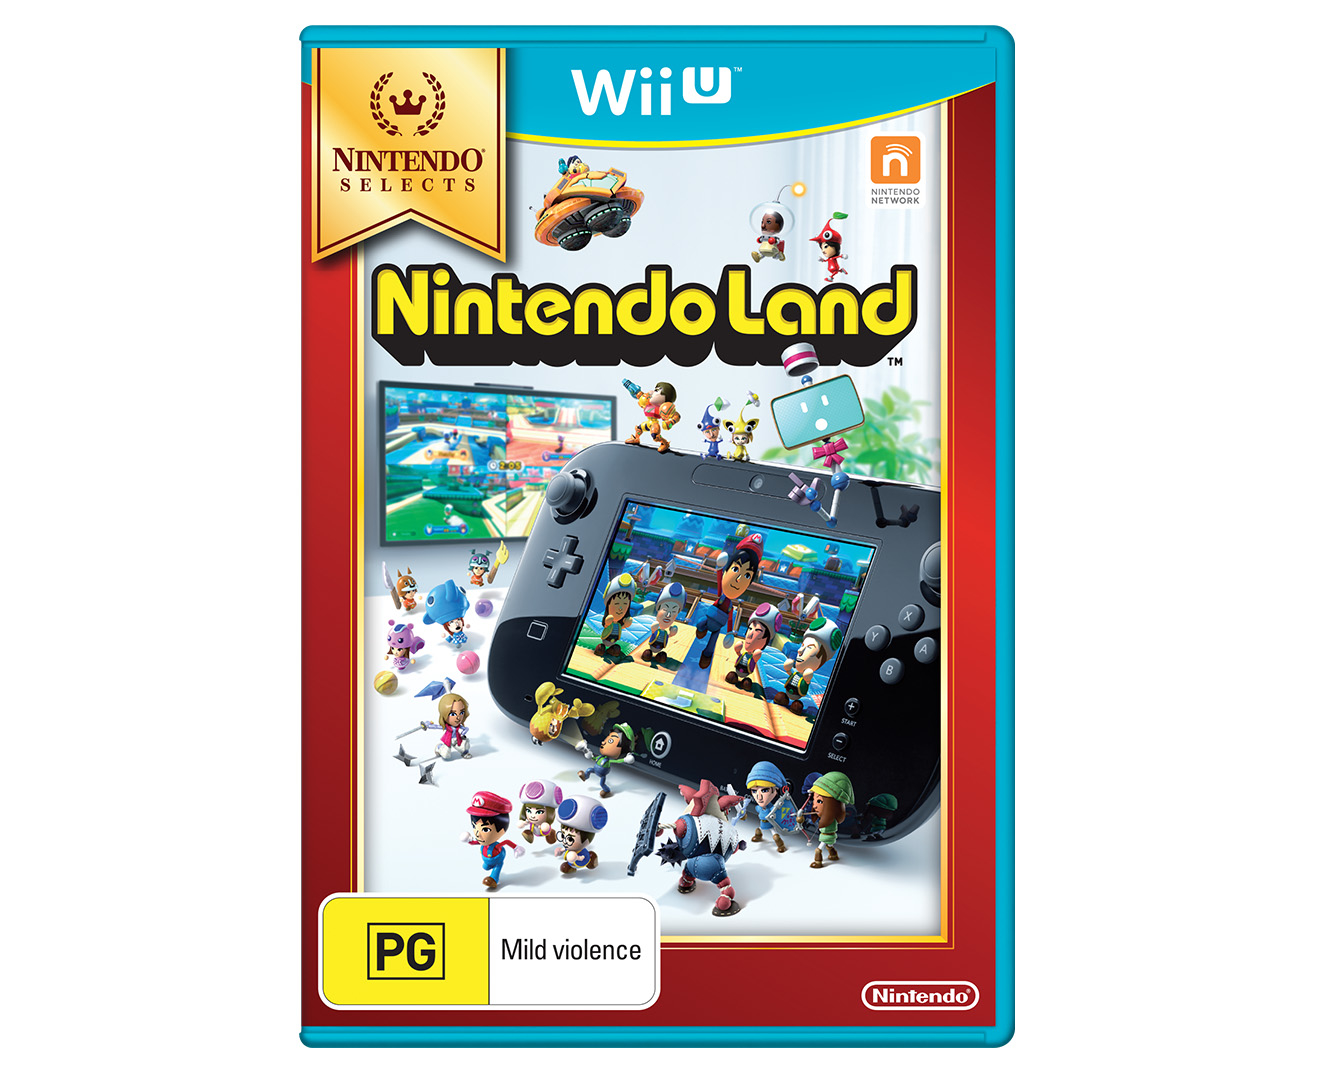 Nintendo Wii U Selects: Nintendo Land Game